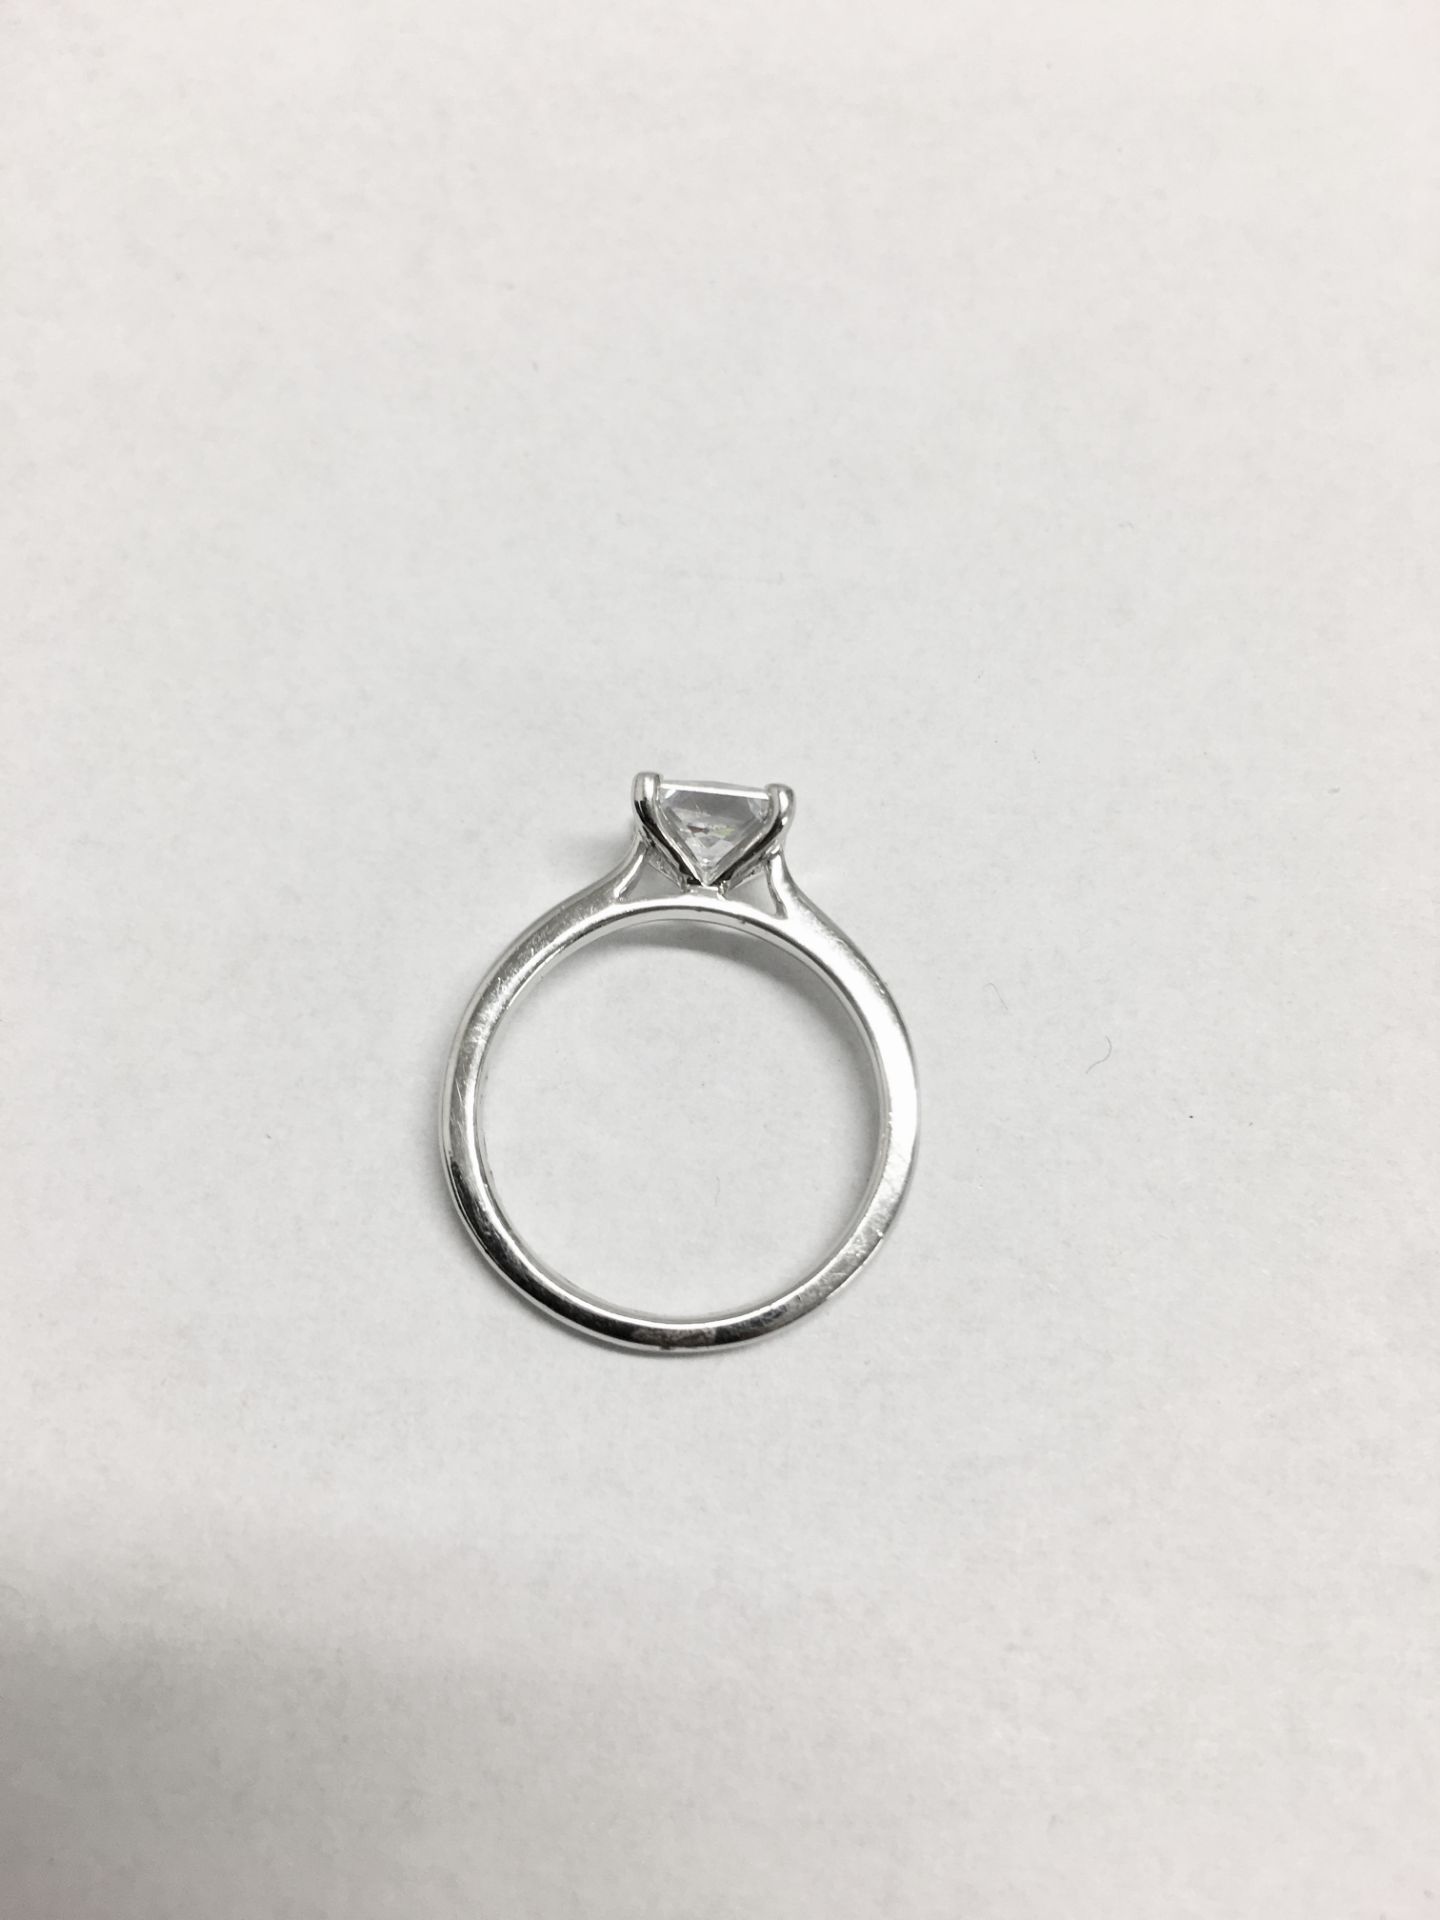 Platinum princess diamond solitaire ring,0.45ct princess cut diamon ,h colour si2 clarity,3.59gms - Bild 2 aus 2